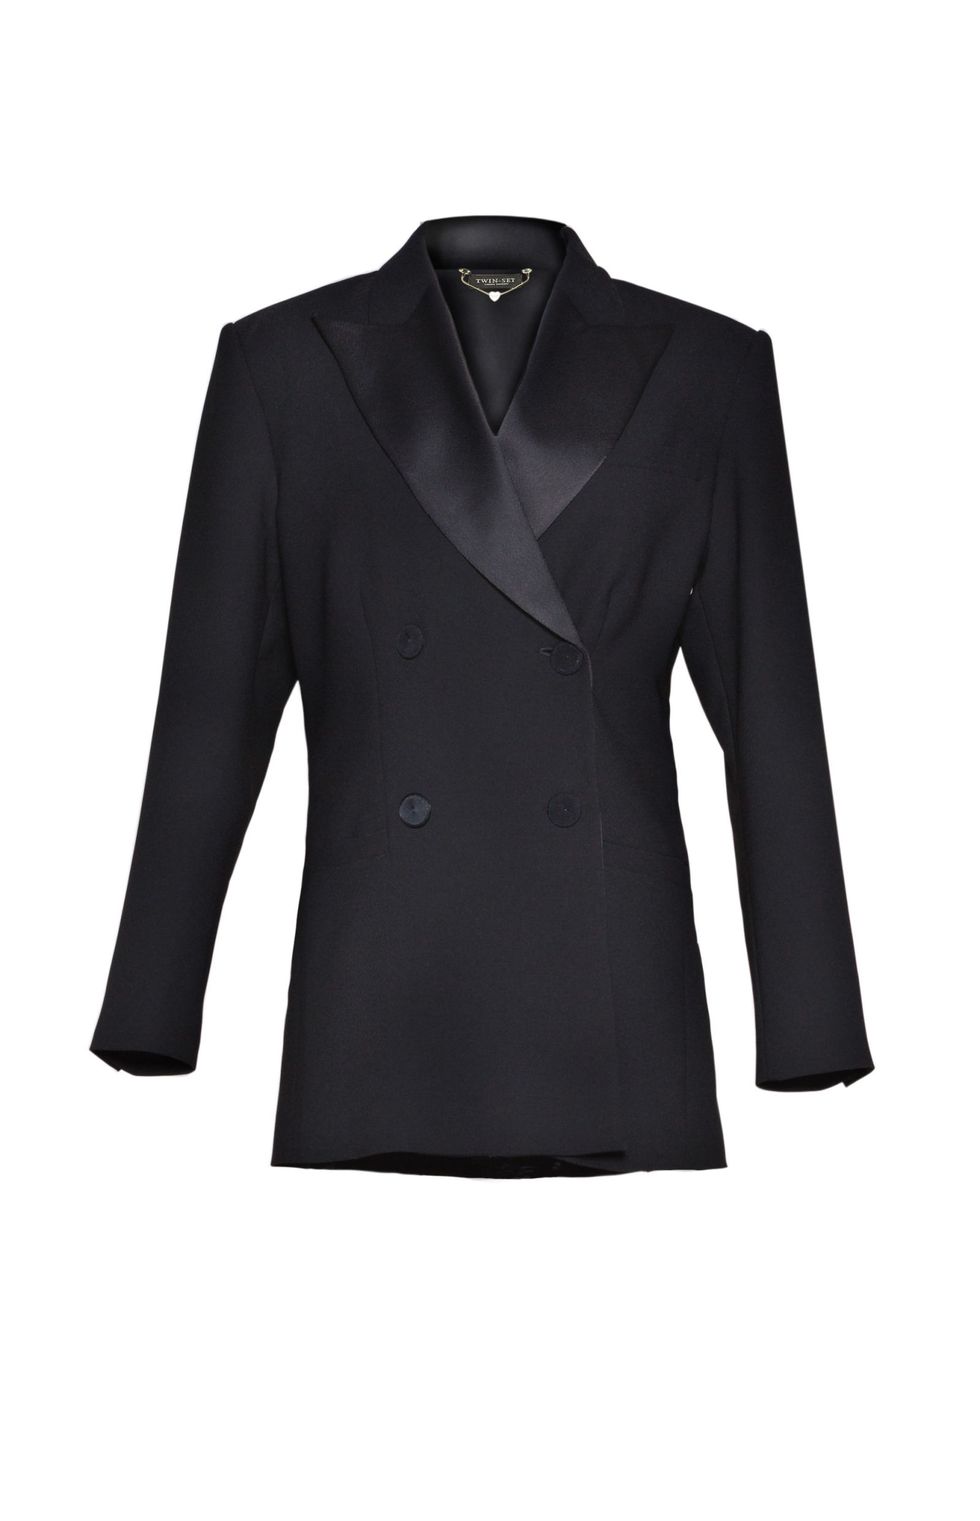 Clothing, Outerwear, Black, Blazer, Jacket, Formal wear, Collar, Sleeve, Suit, Coat, 